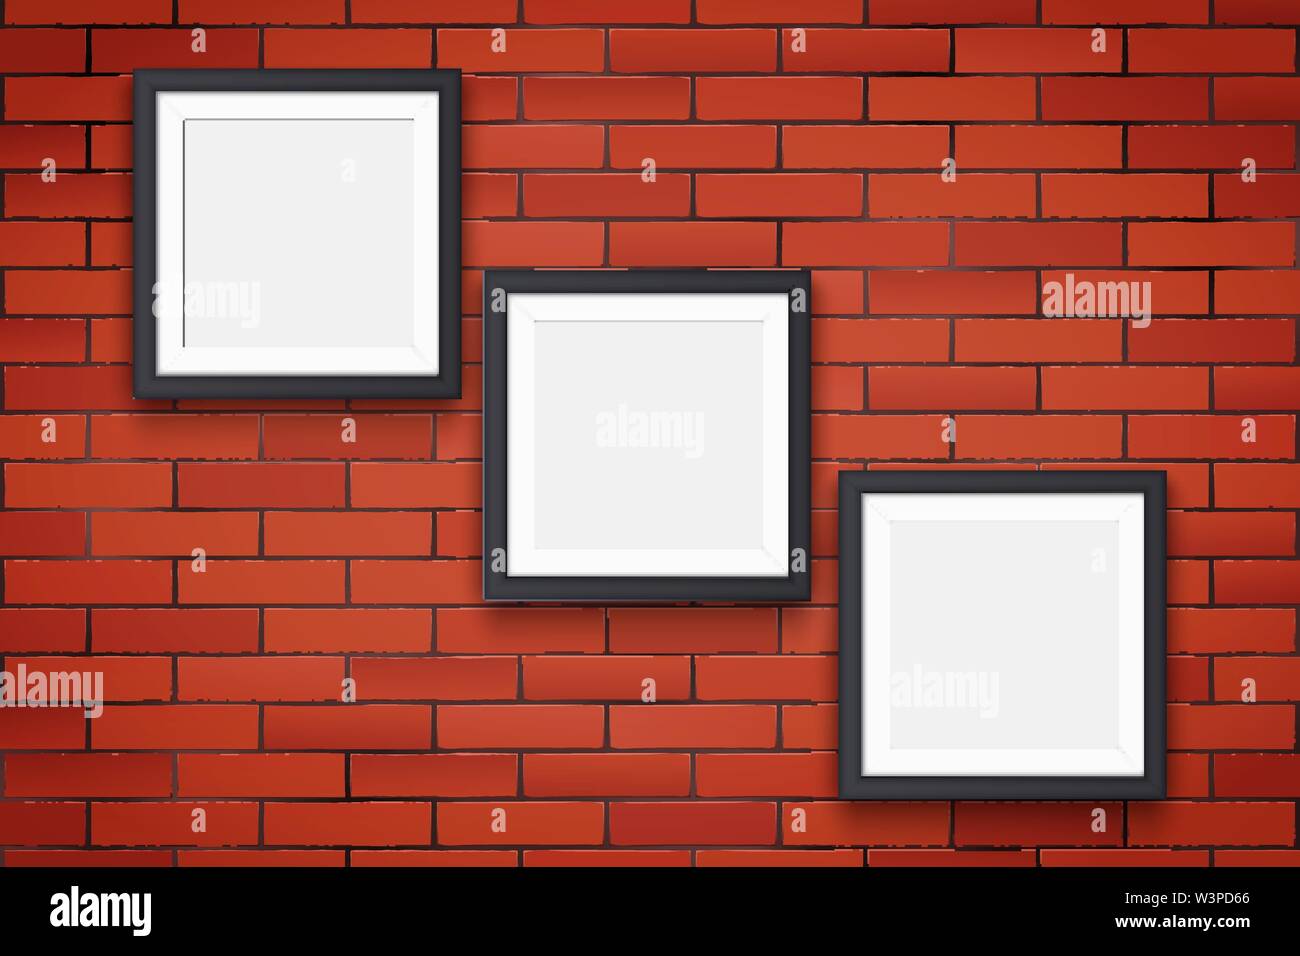 Red brick wall mit Bilderrahmen Stock Vektor